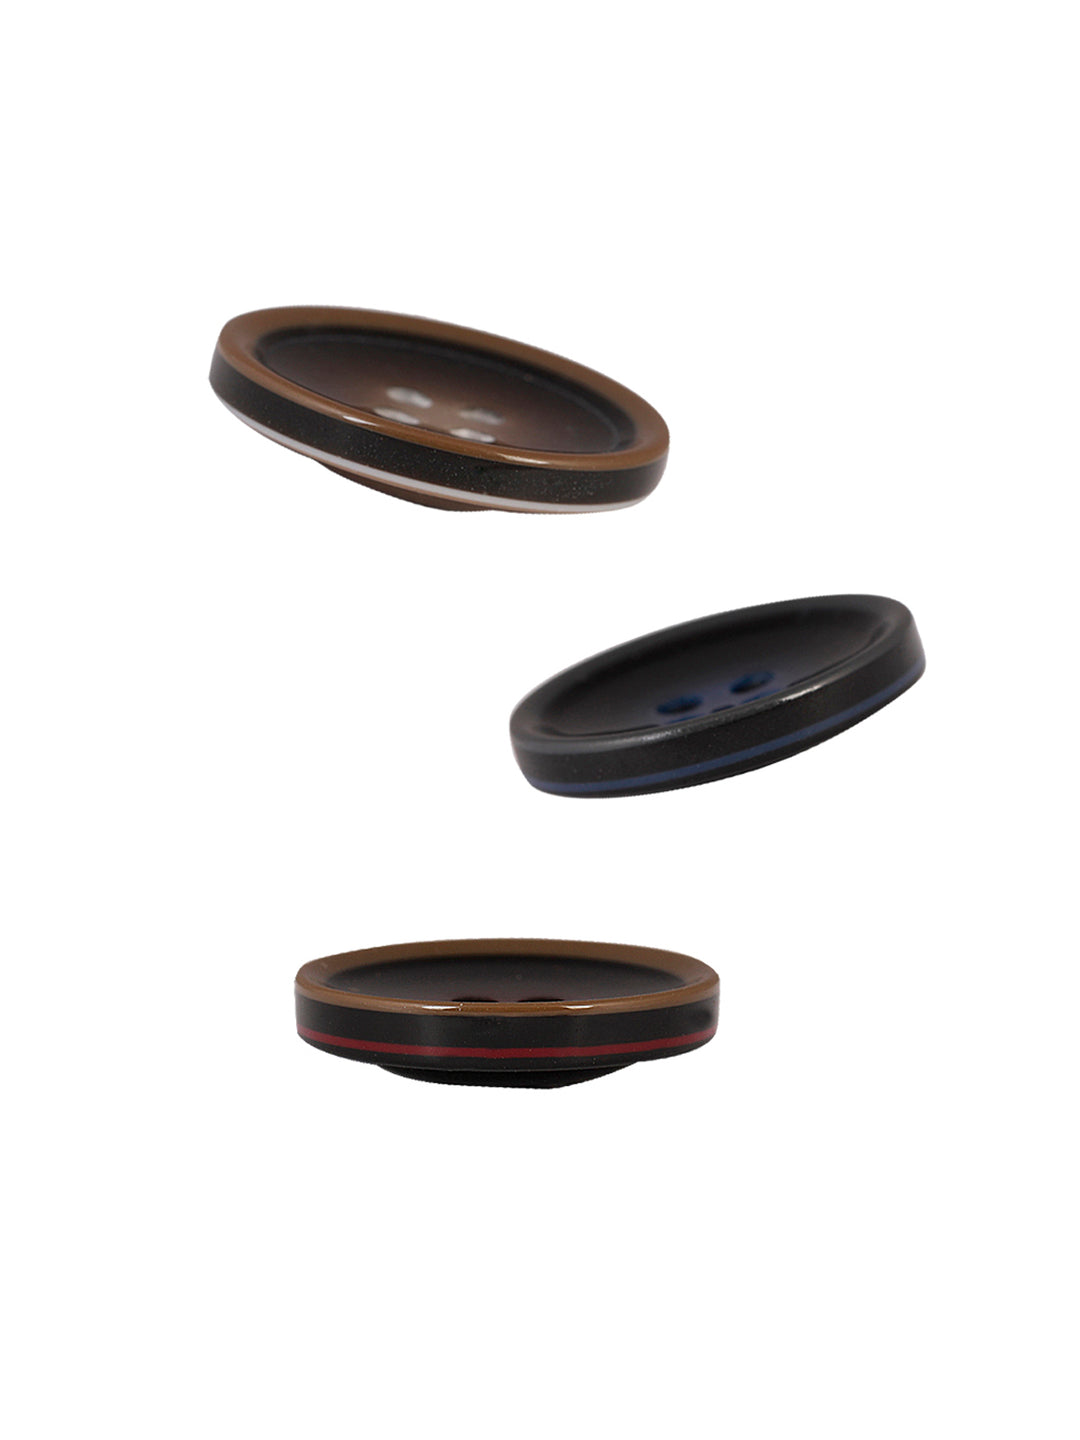 Simple Round Shape 4-Hole Hollow Blazer/Coat Button